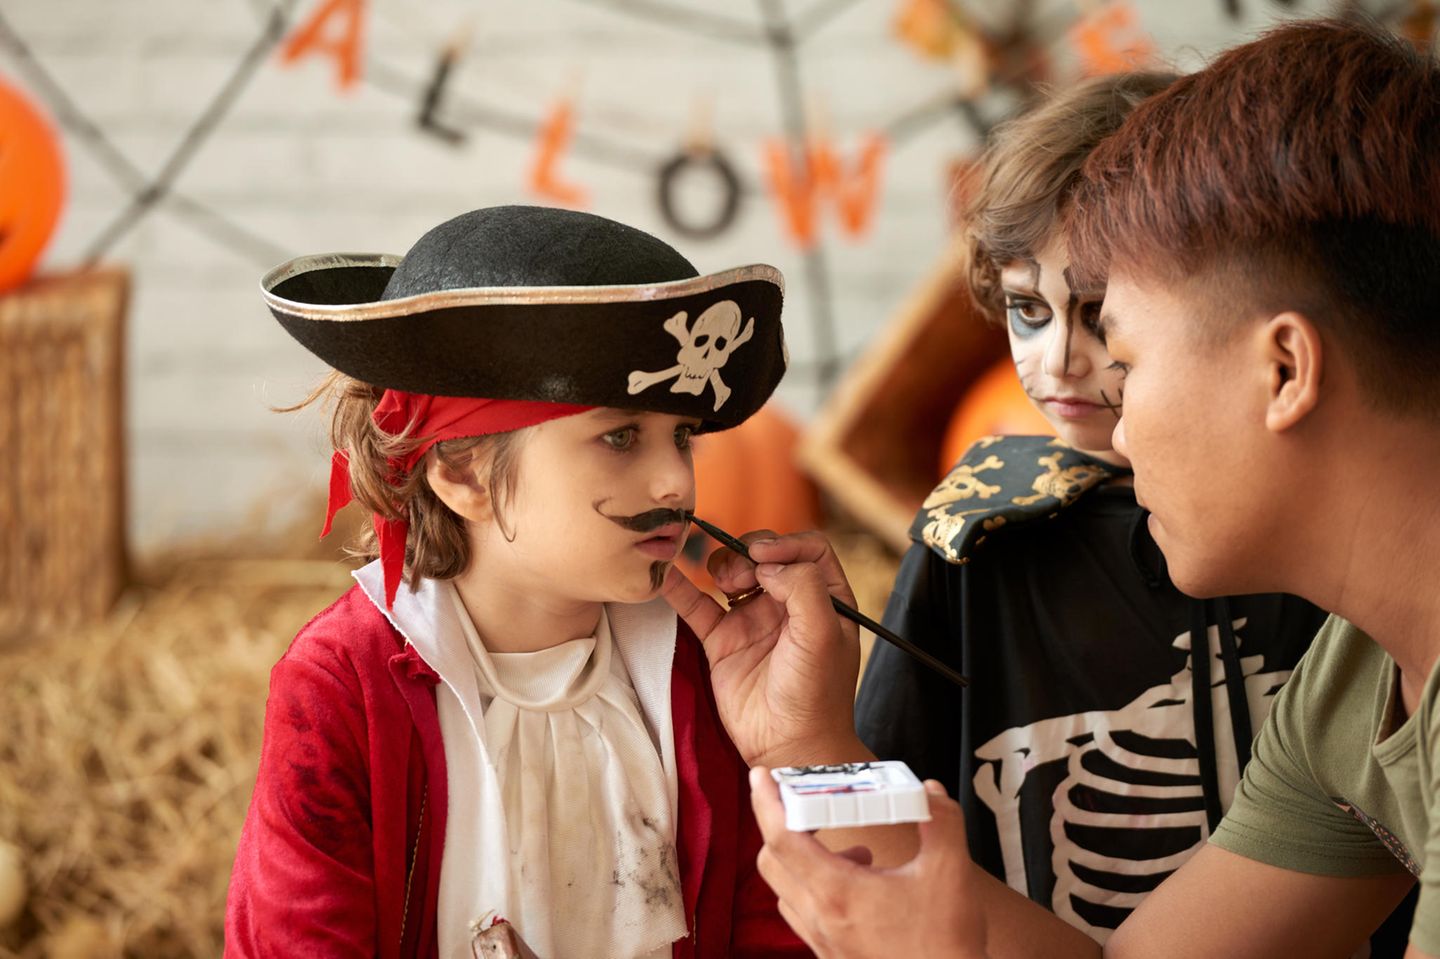 Als Pirat schminken: Junge wird als Pirat geschminkt